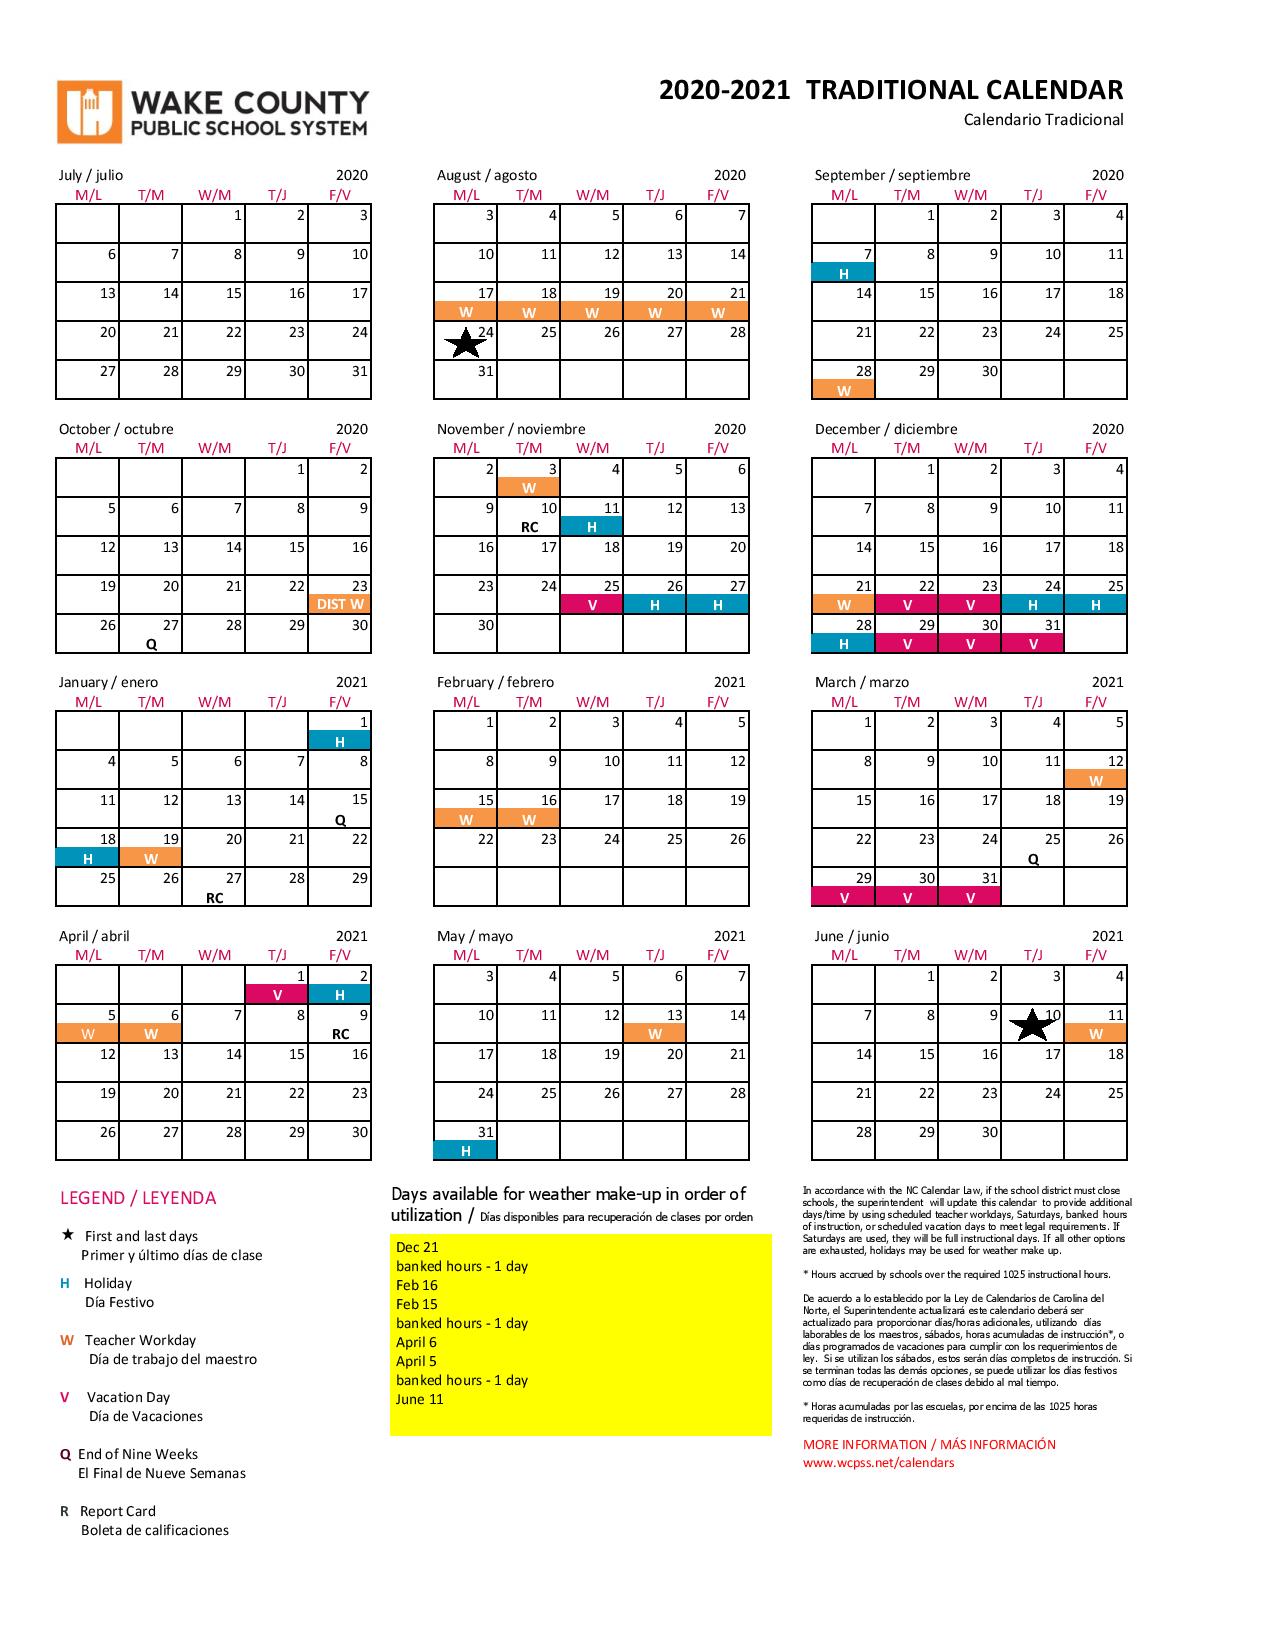 Wake County Schools Calendar 2020 2021 Download Now